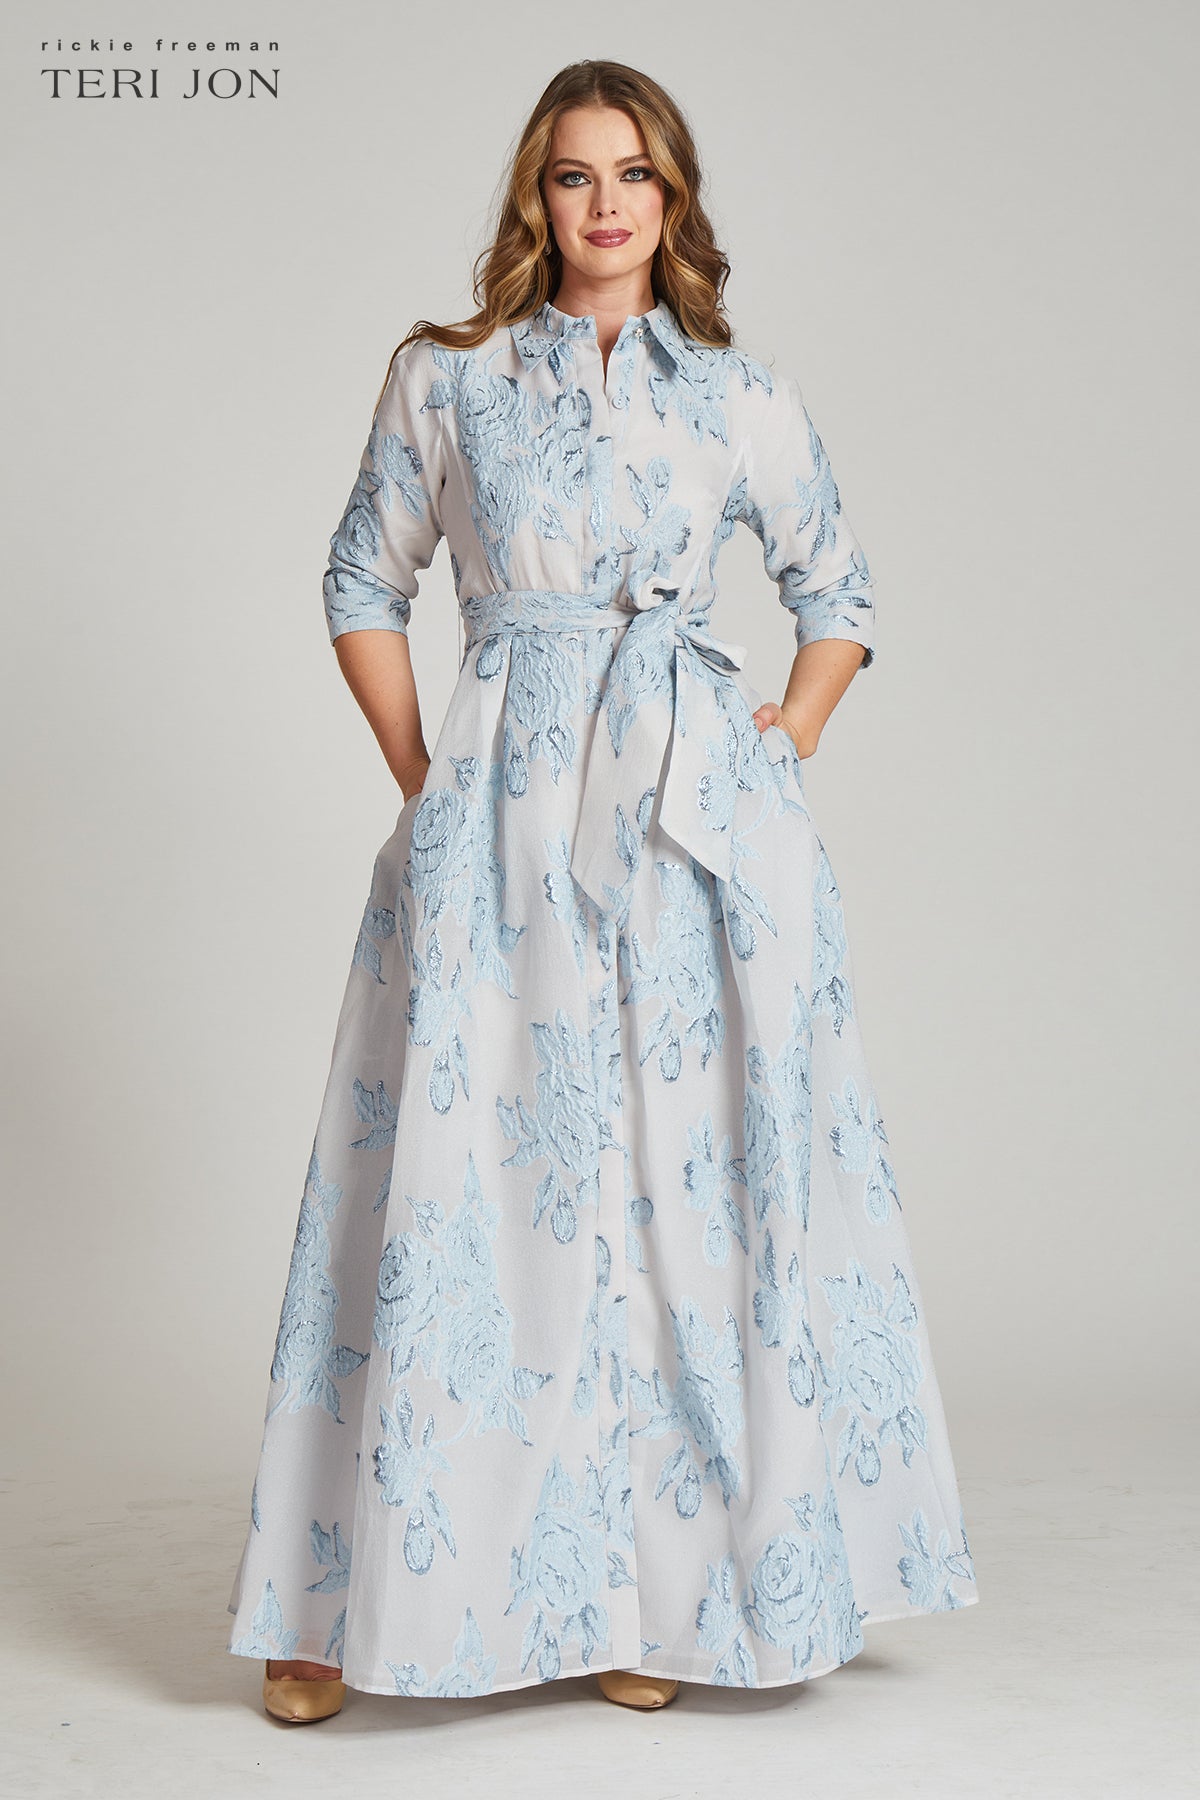 Metallic Jacquard Shirtdress Gown with Floral Print | Teri Jon 